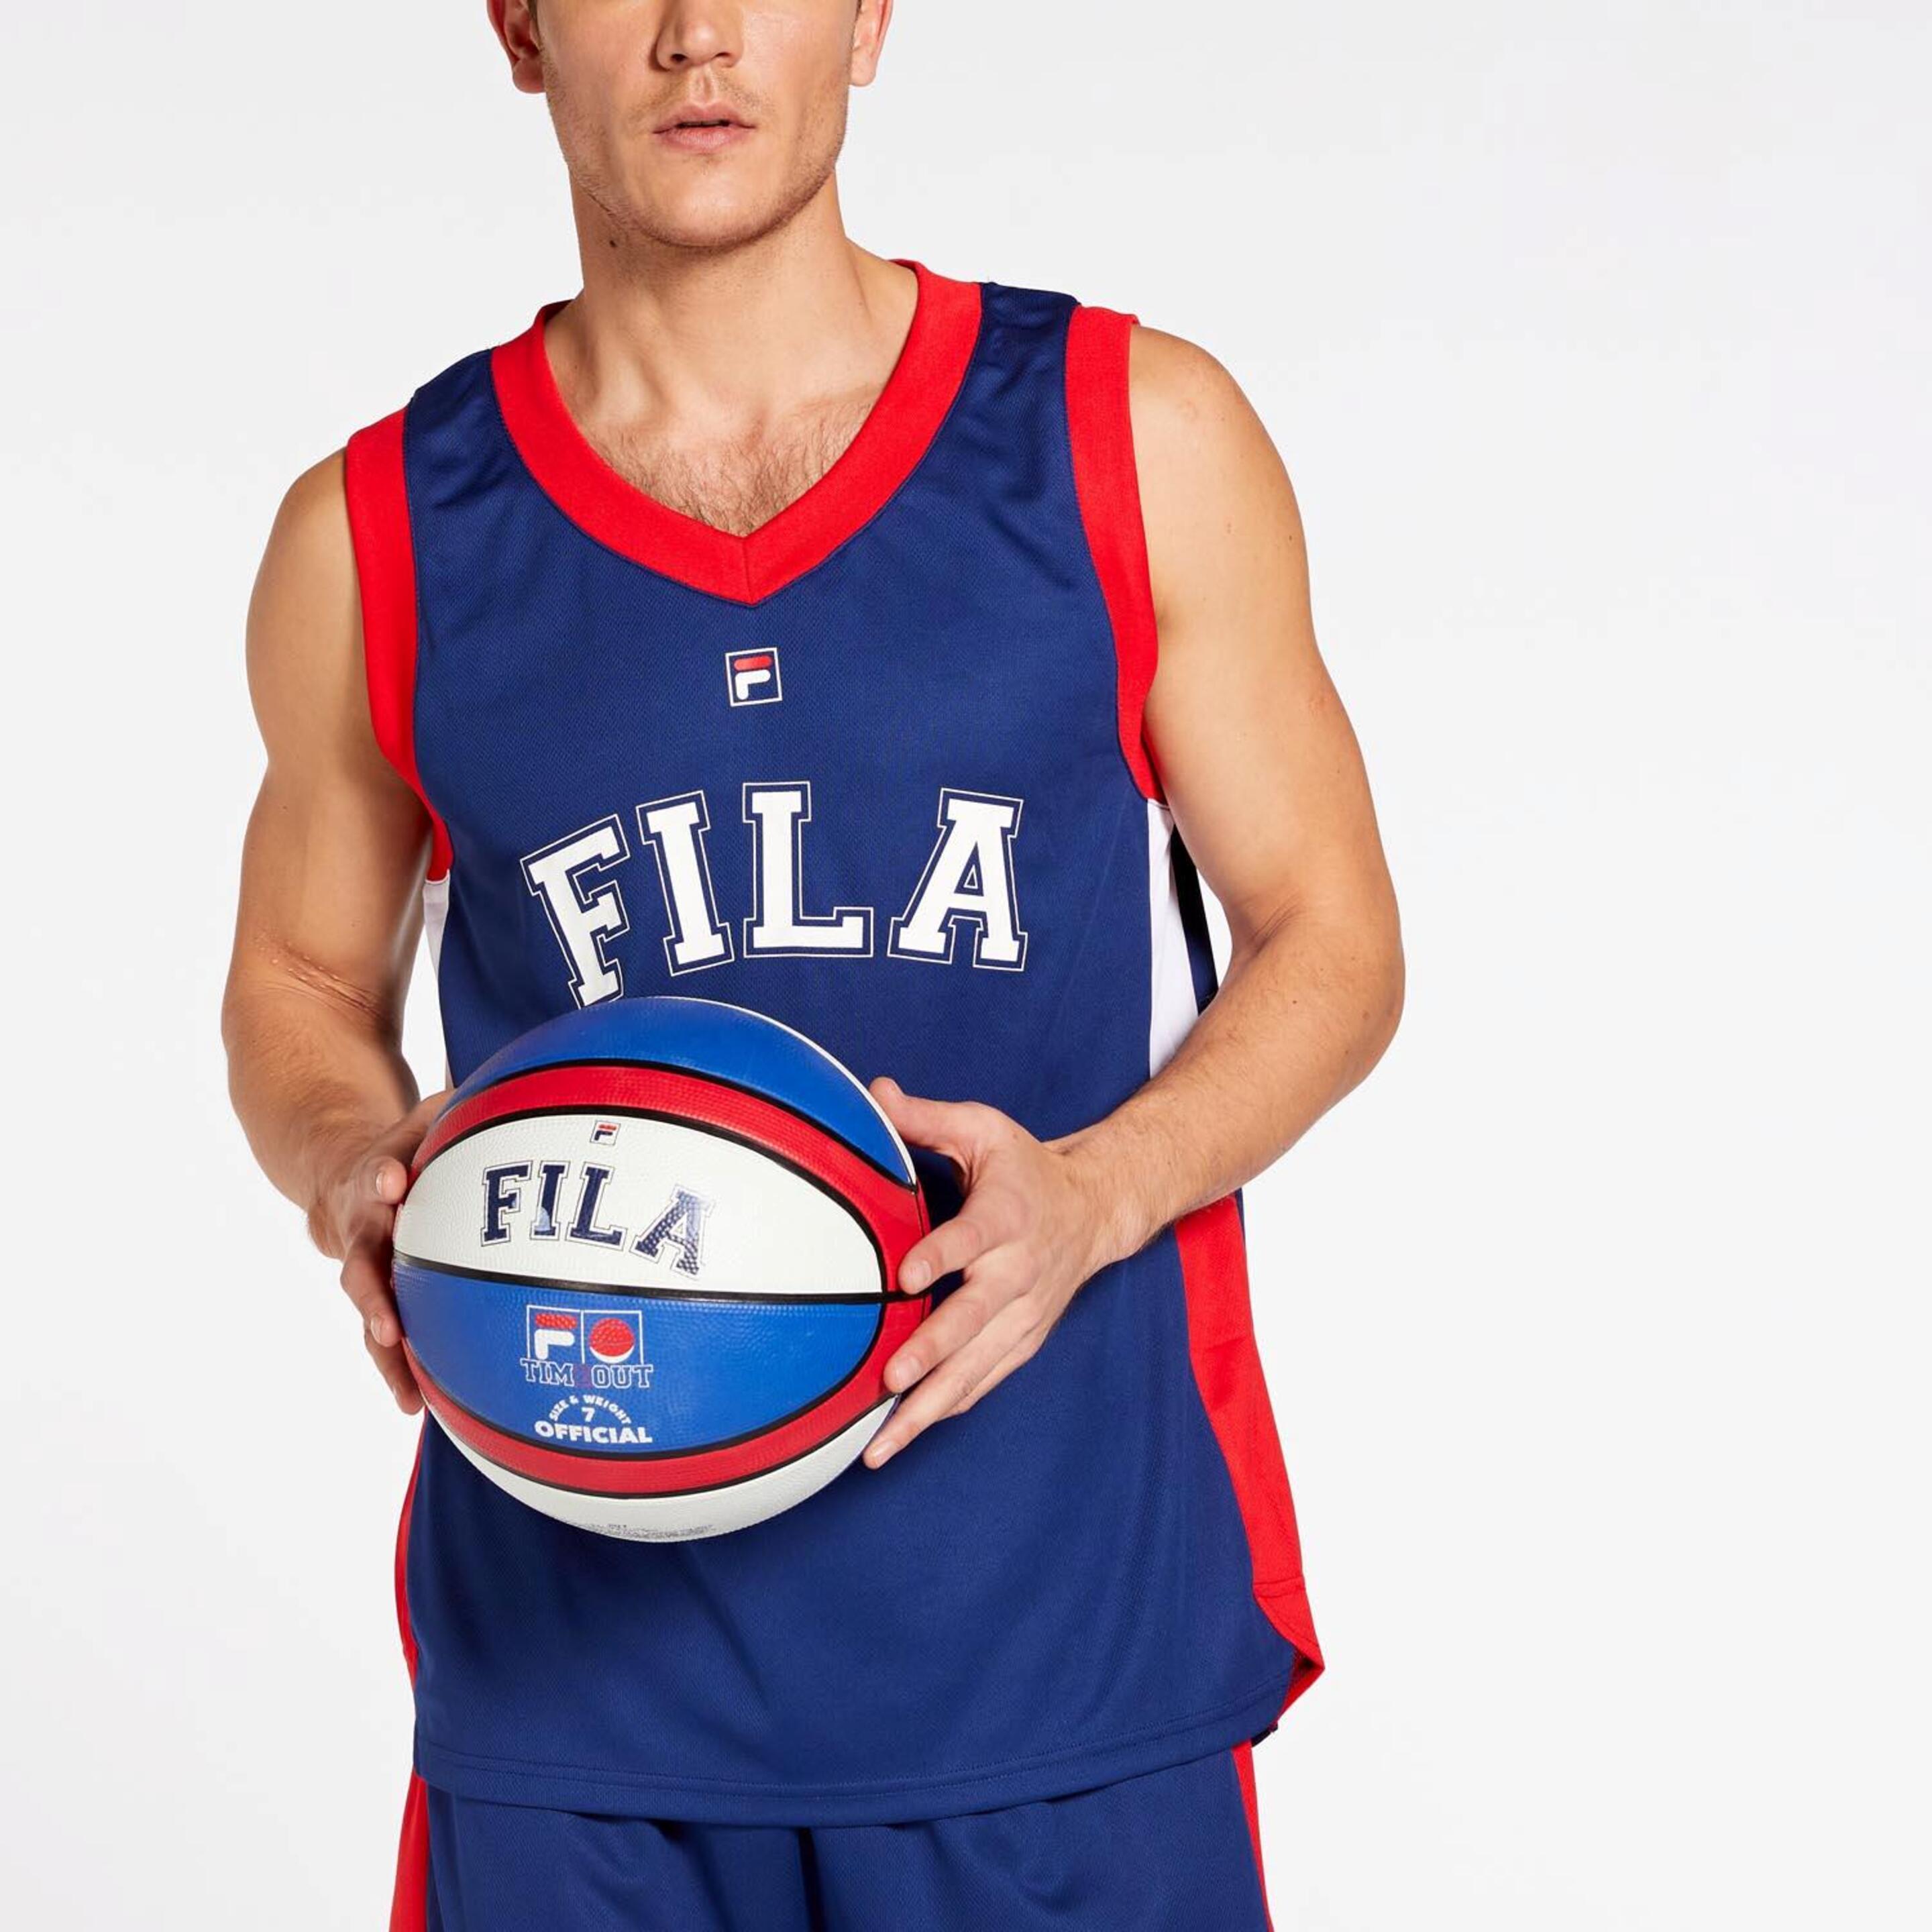 Fila Basket Cro Camiseta S/m Pol Excl